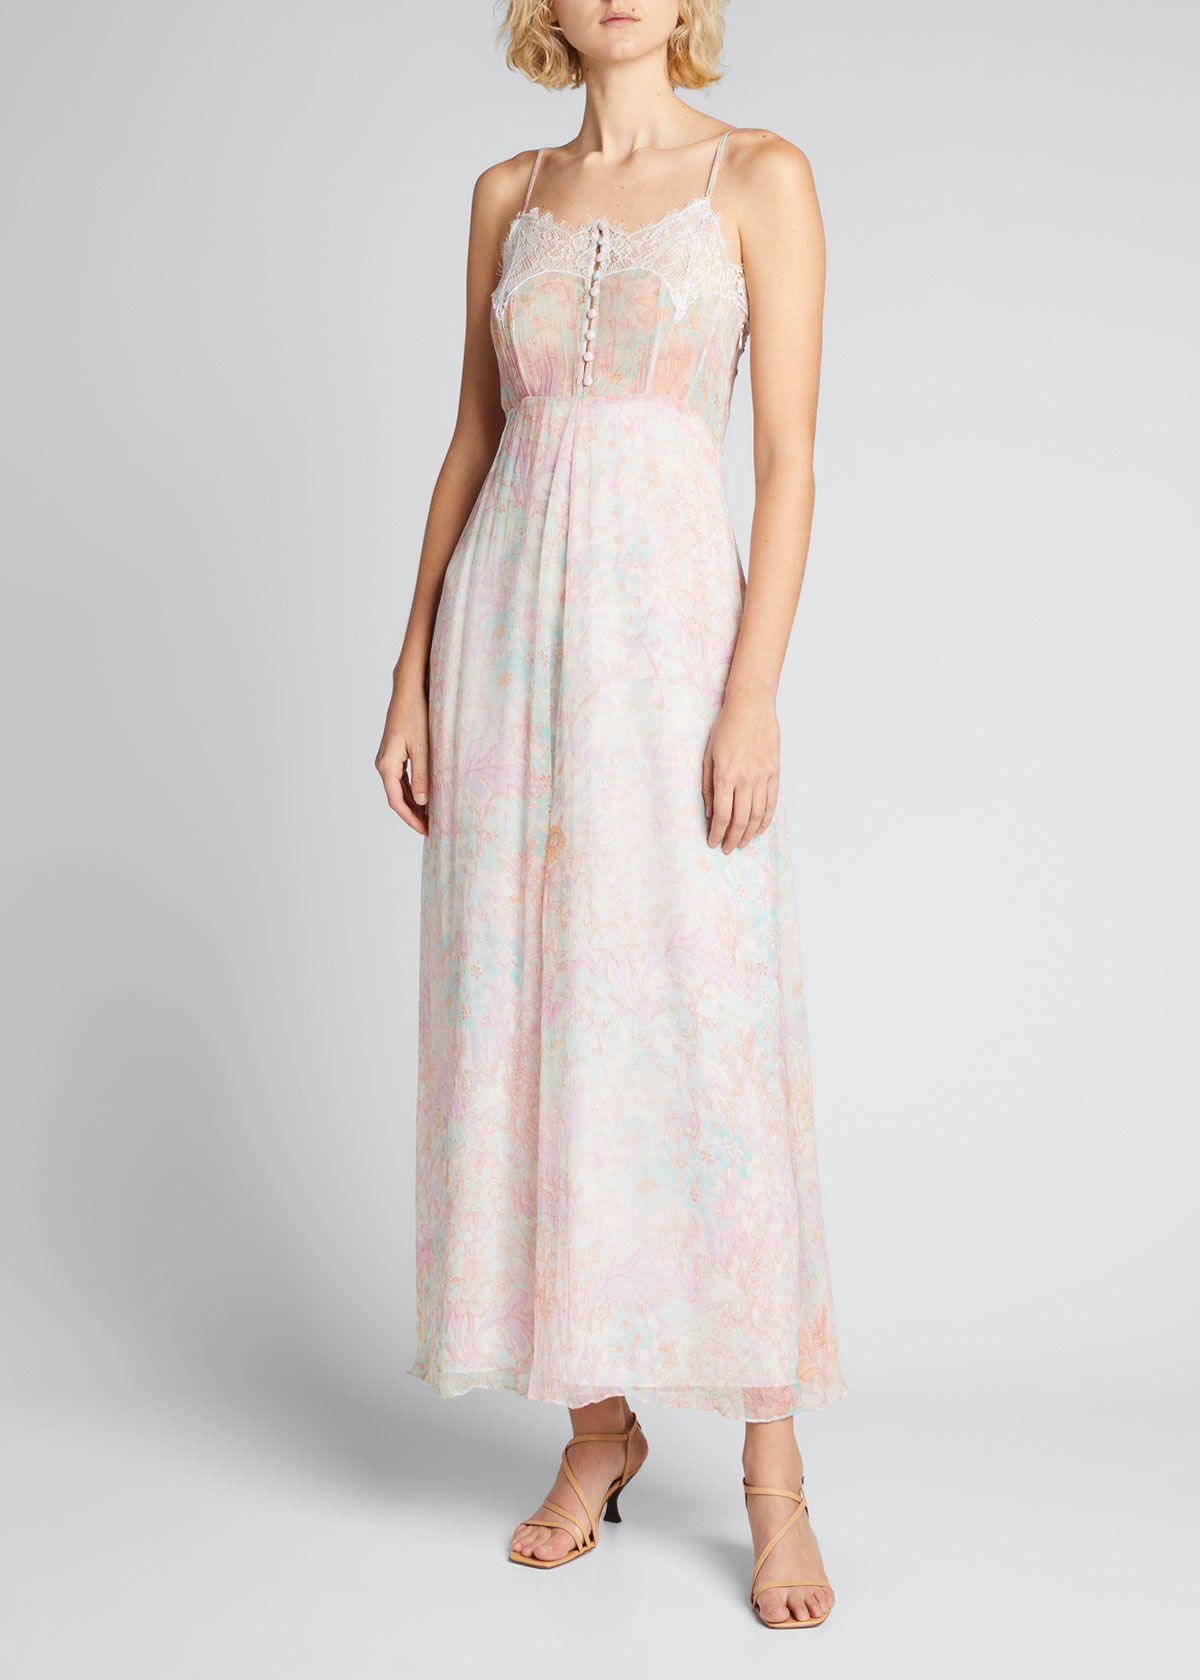 Elma Floral Slip Dress with Lace | Bergdorf Goodman